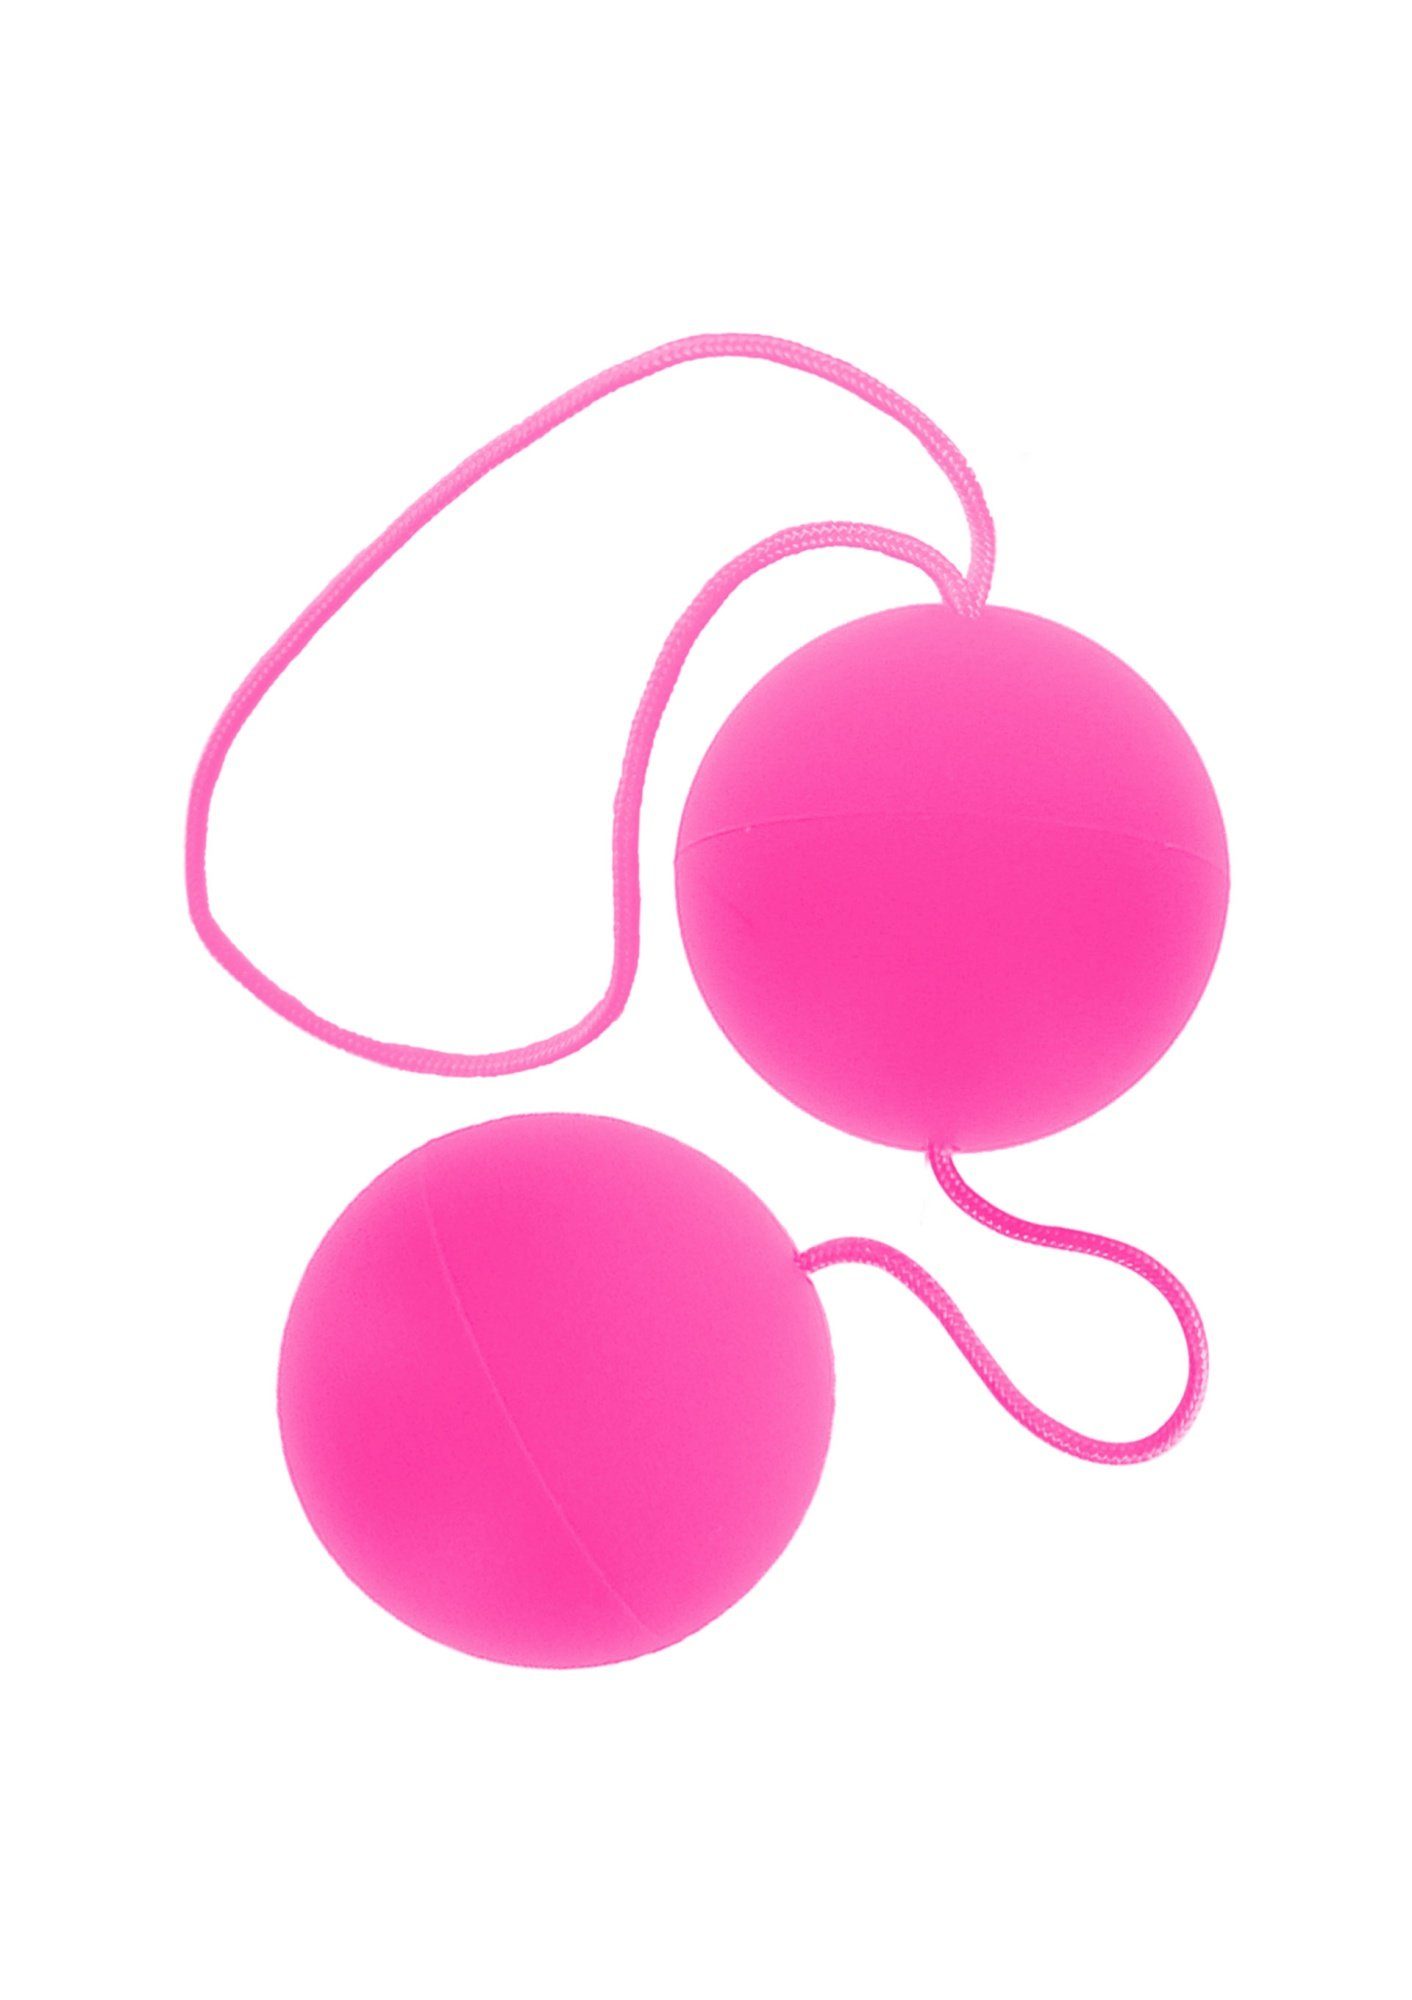 TOYJOY Beckenbodentrainer Funky Balls Beckenbodenkugeln Beckenboden Trainer - pink